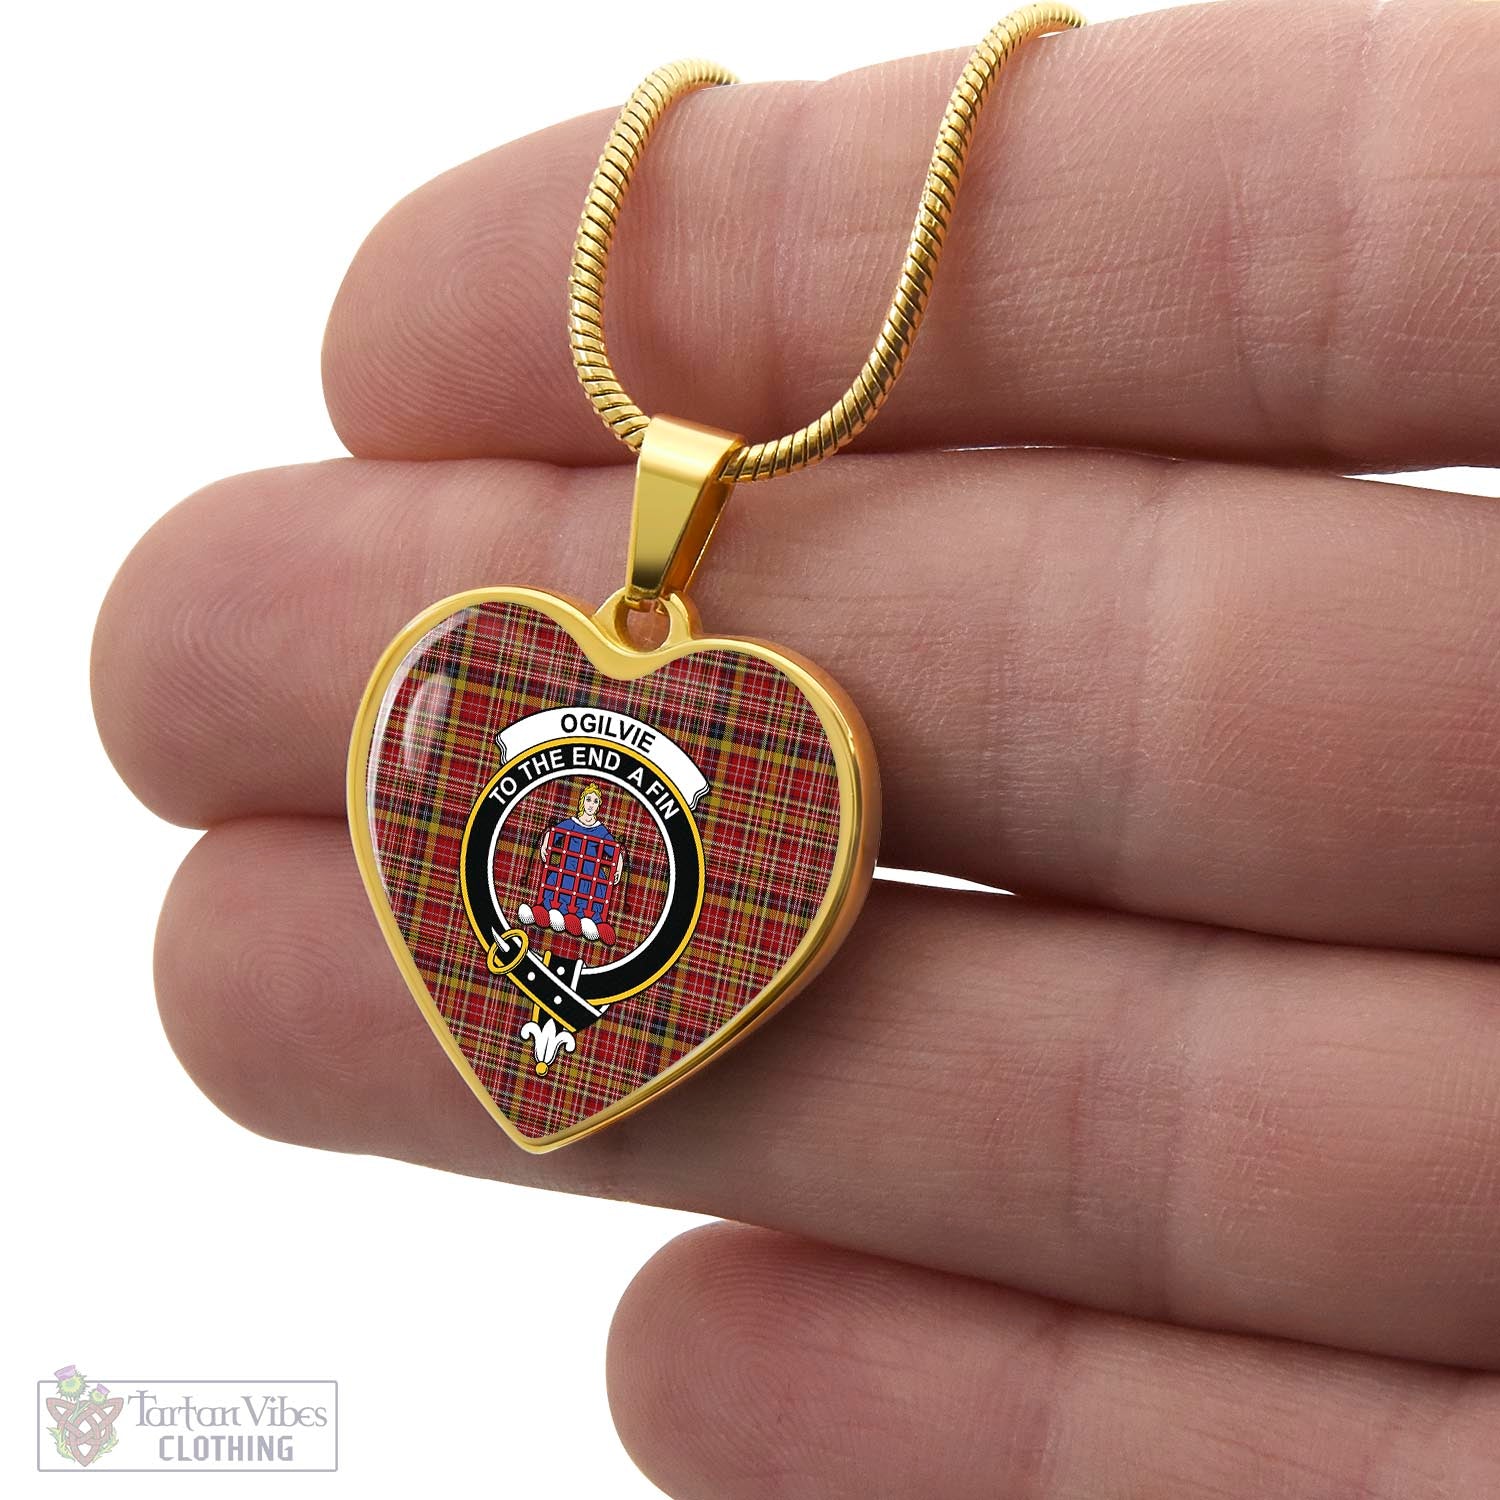 Tartan Vibes Clothing Ogilvie (Ogilvy) of Strathallan Tartan Heart Necklace with Family Crest